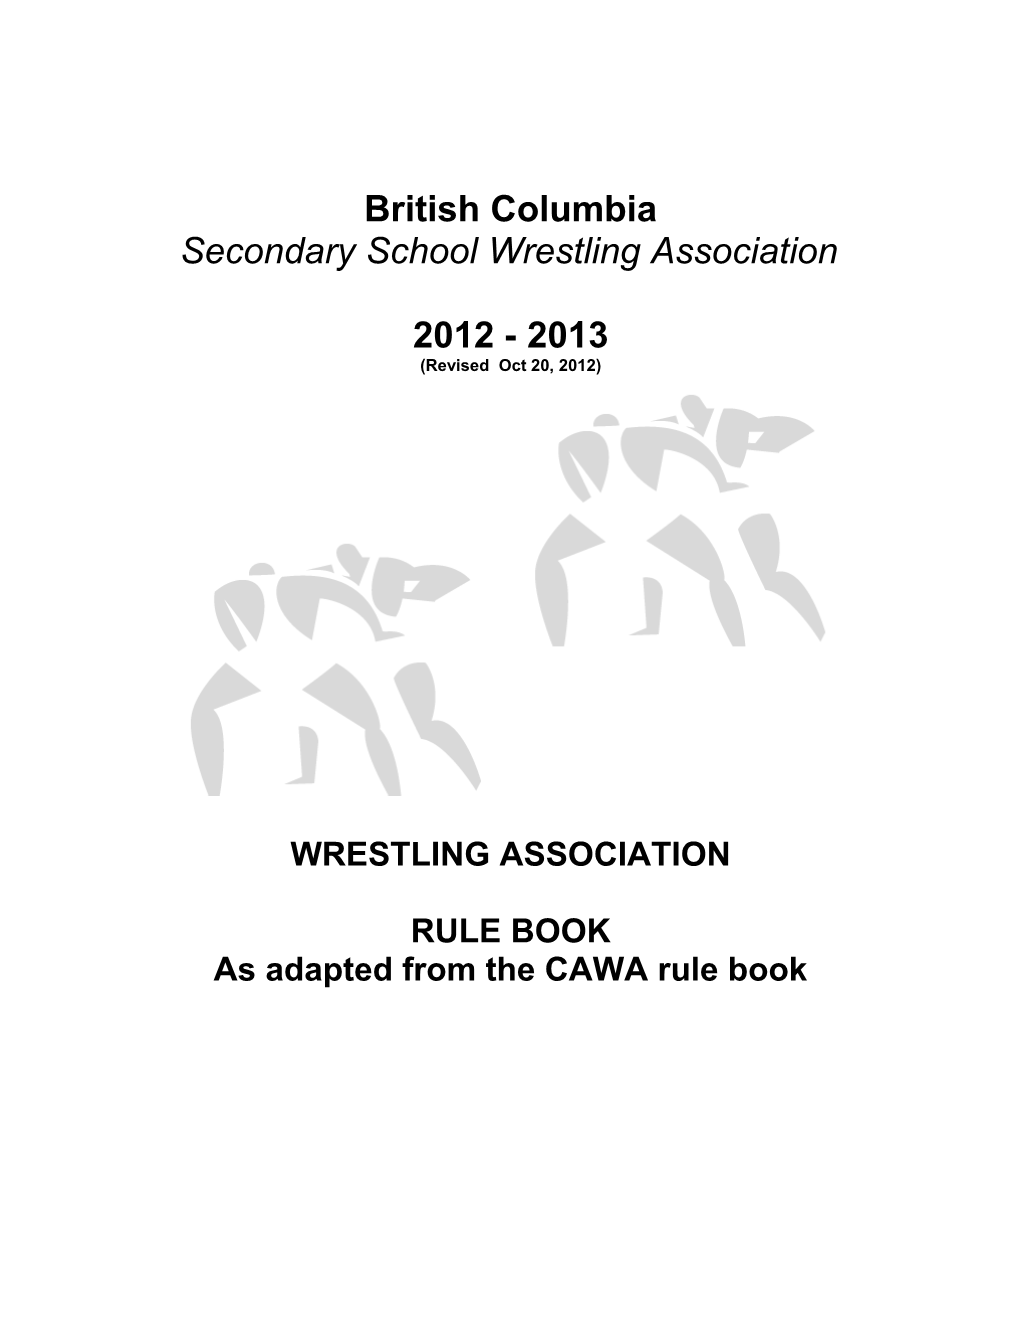 Secondary School Wrestling Association